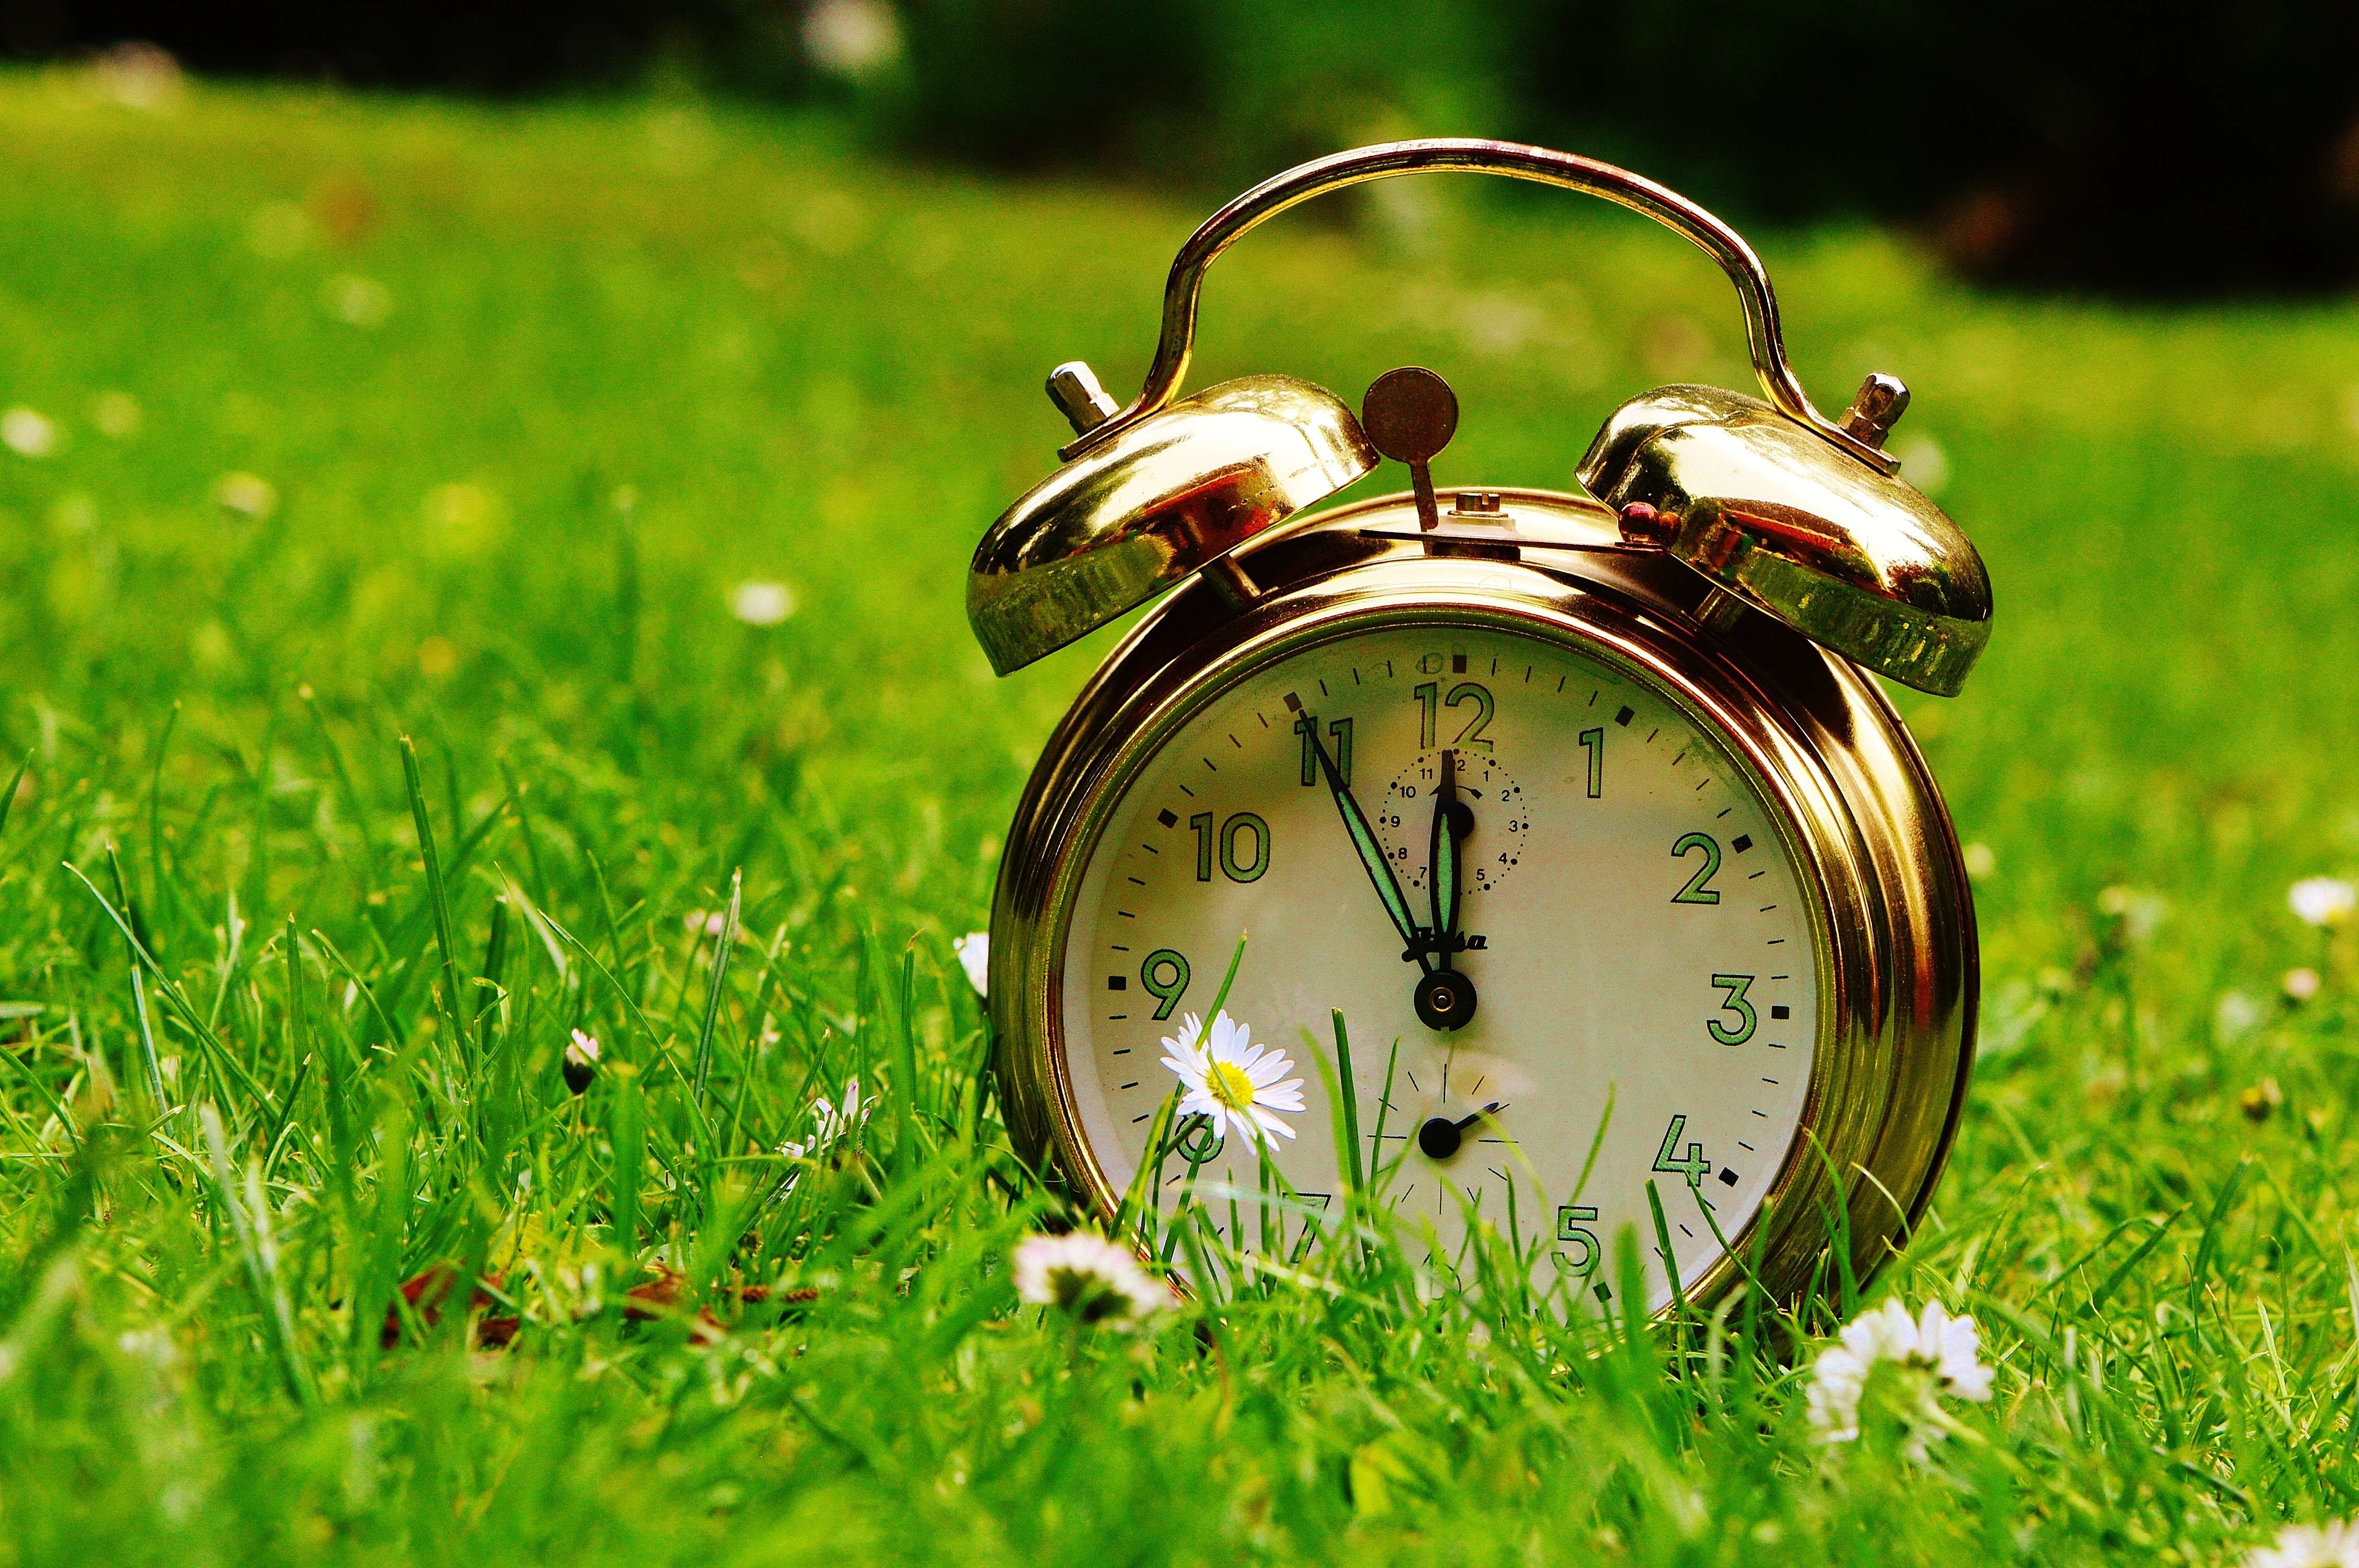 tilt shift lens photography of gold alarm clock on green grass field ...